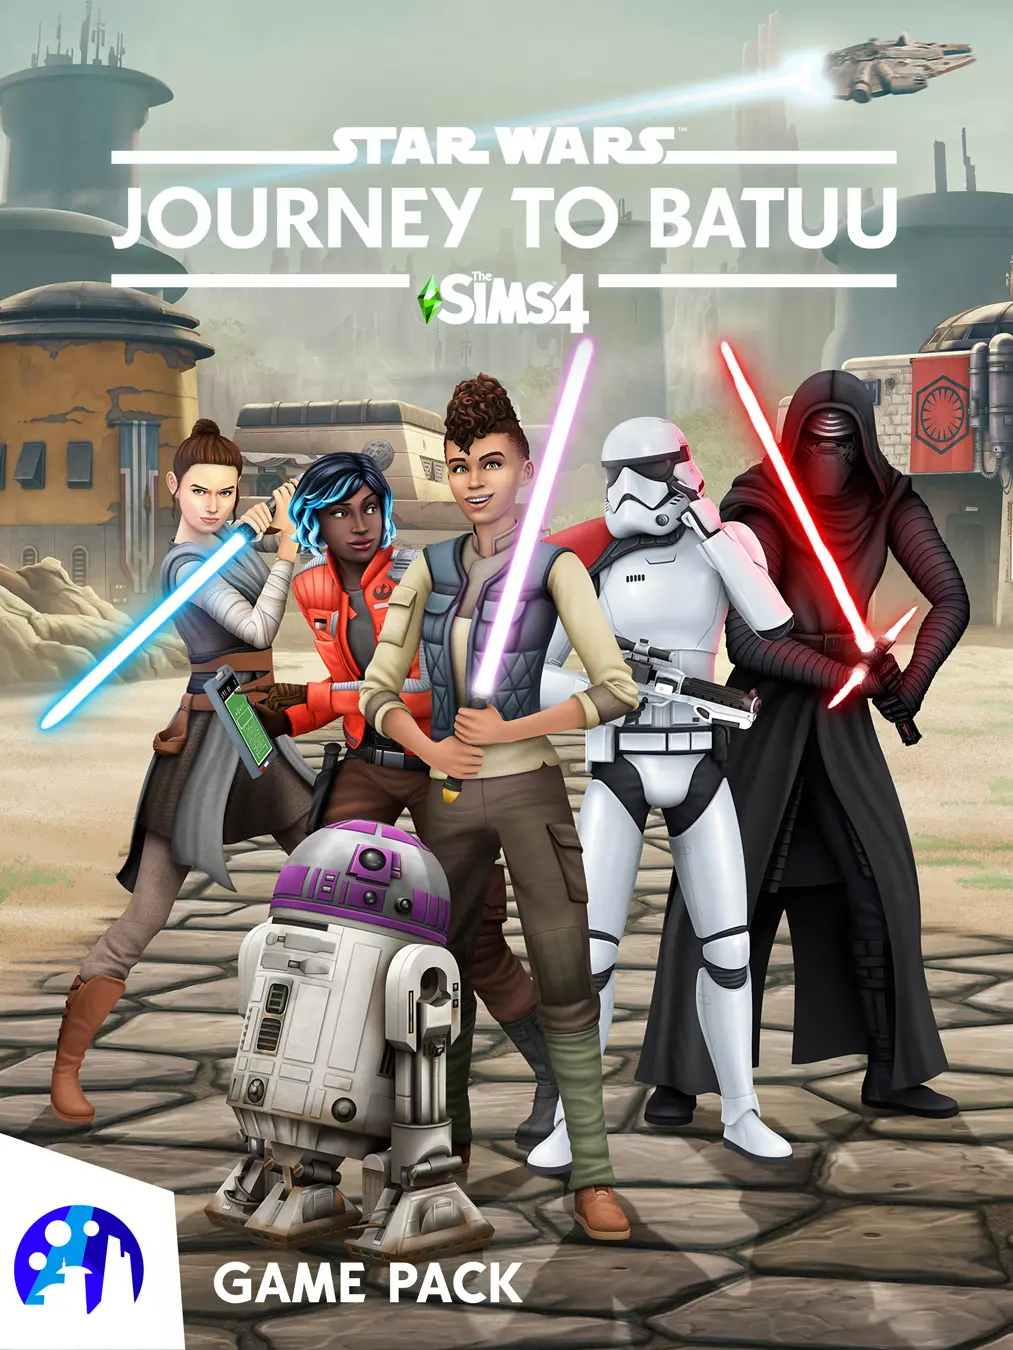 The Sims 4 - Star Wars: Journey to Batuu DLC (PC) - EA Play - Digital Code